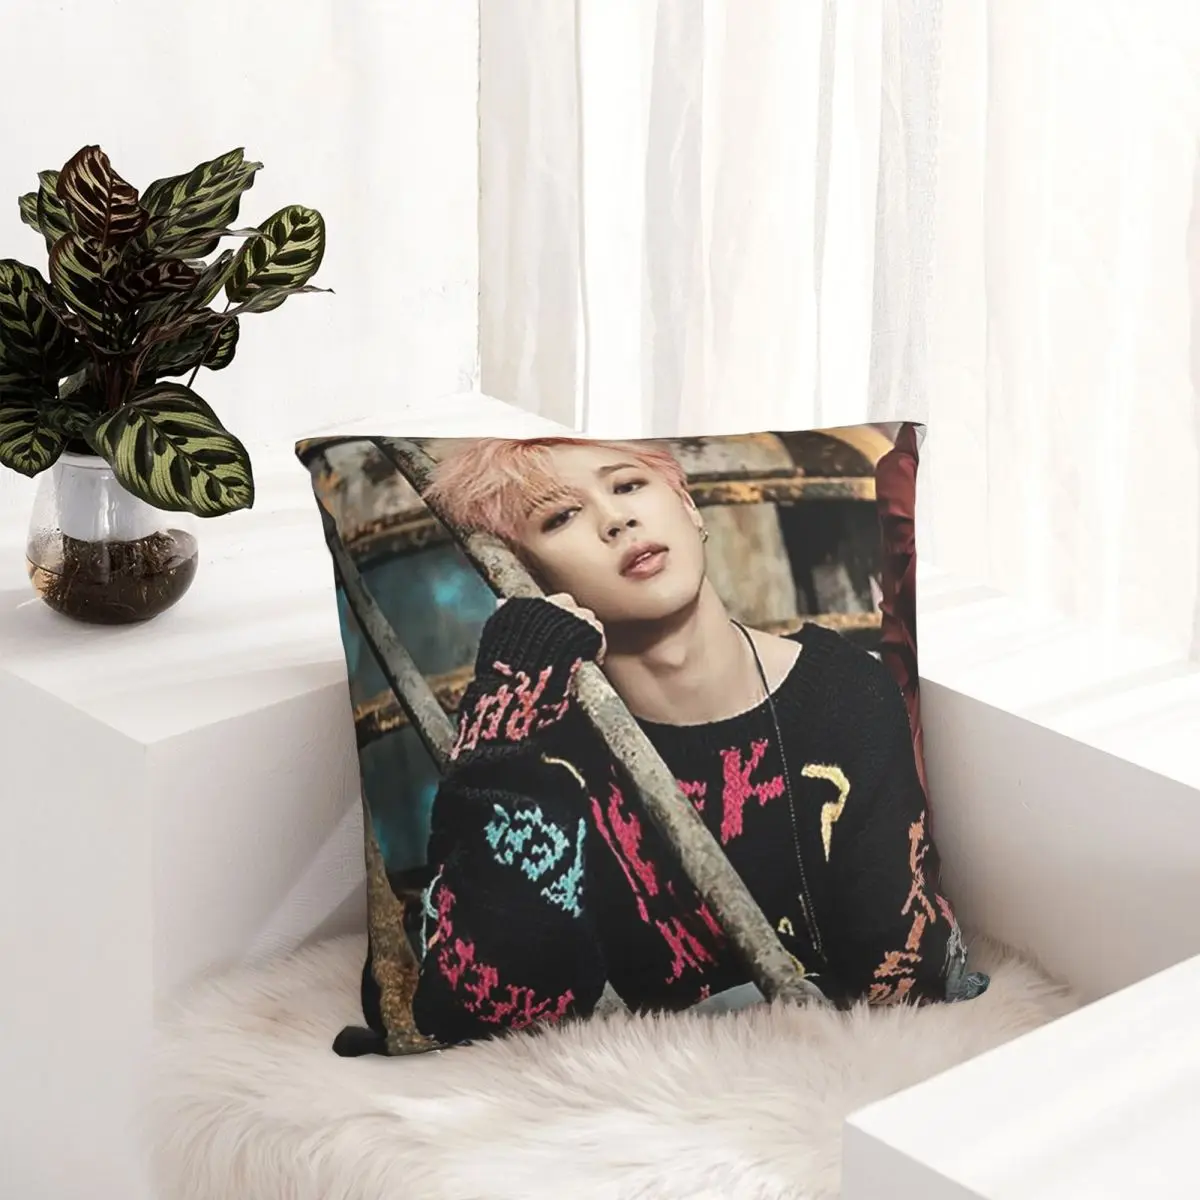 

Jimin Comeback Pillowcase Kpop Star Combination Dakimakura Pillow Case Decor Cushions Cover Home Sofa Bed Bedding Car Spoof